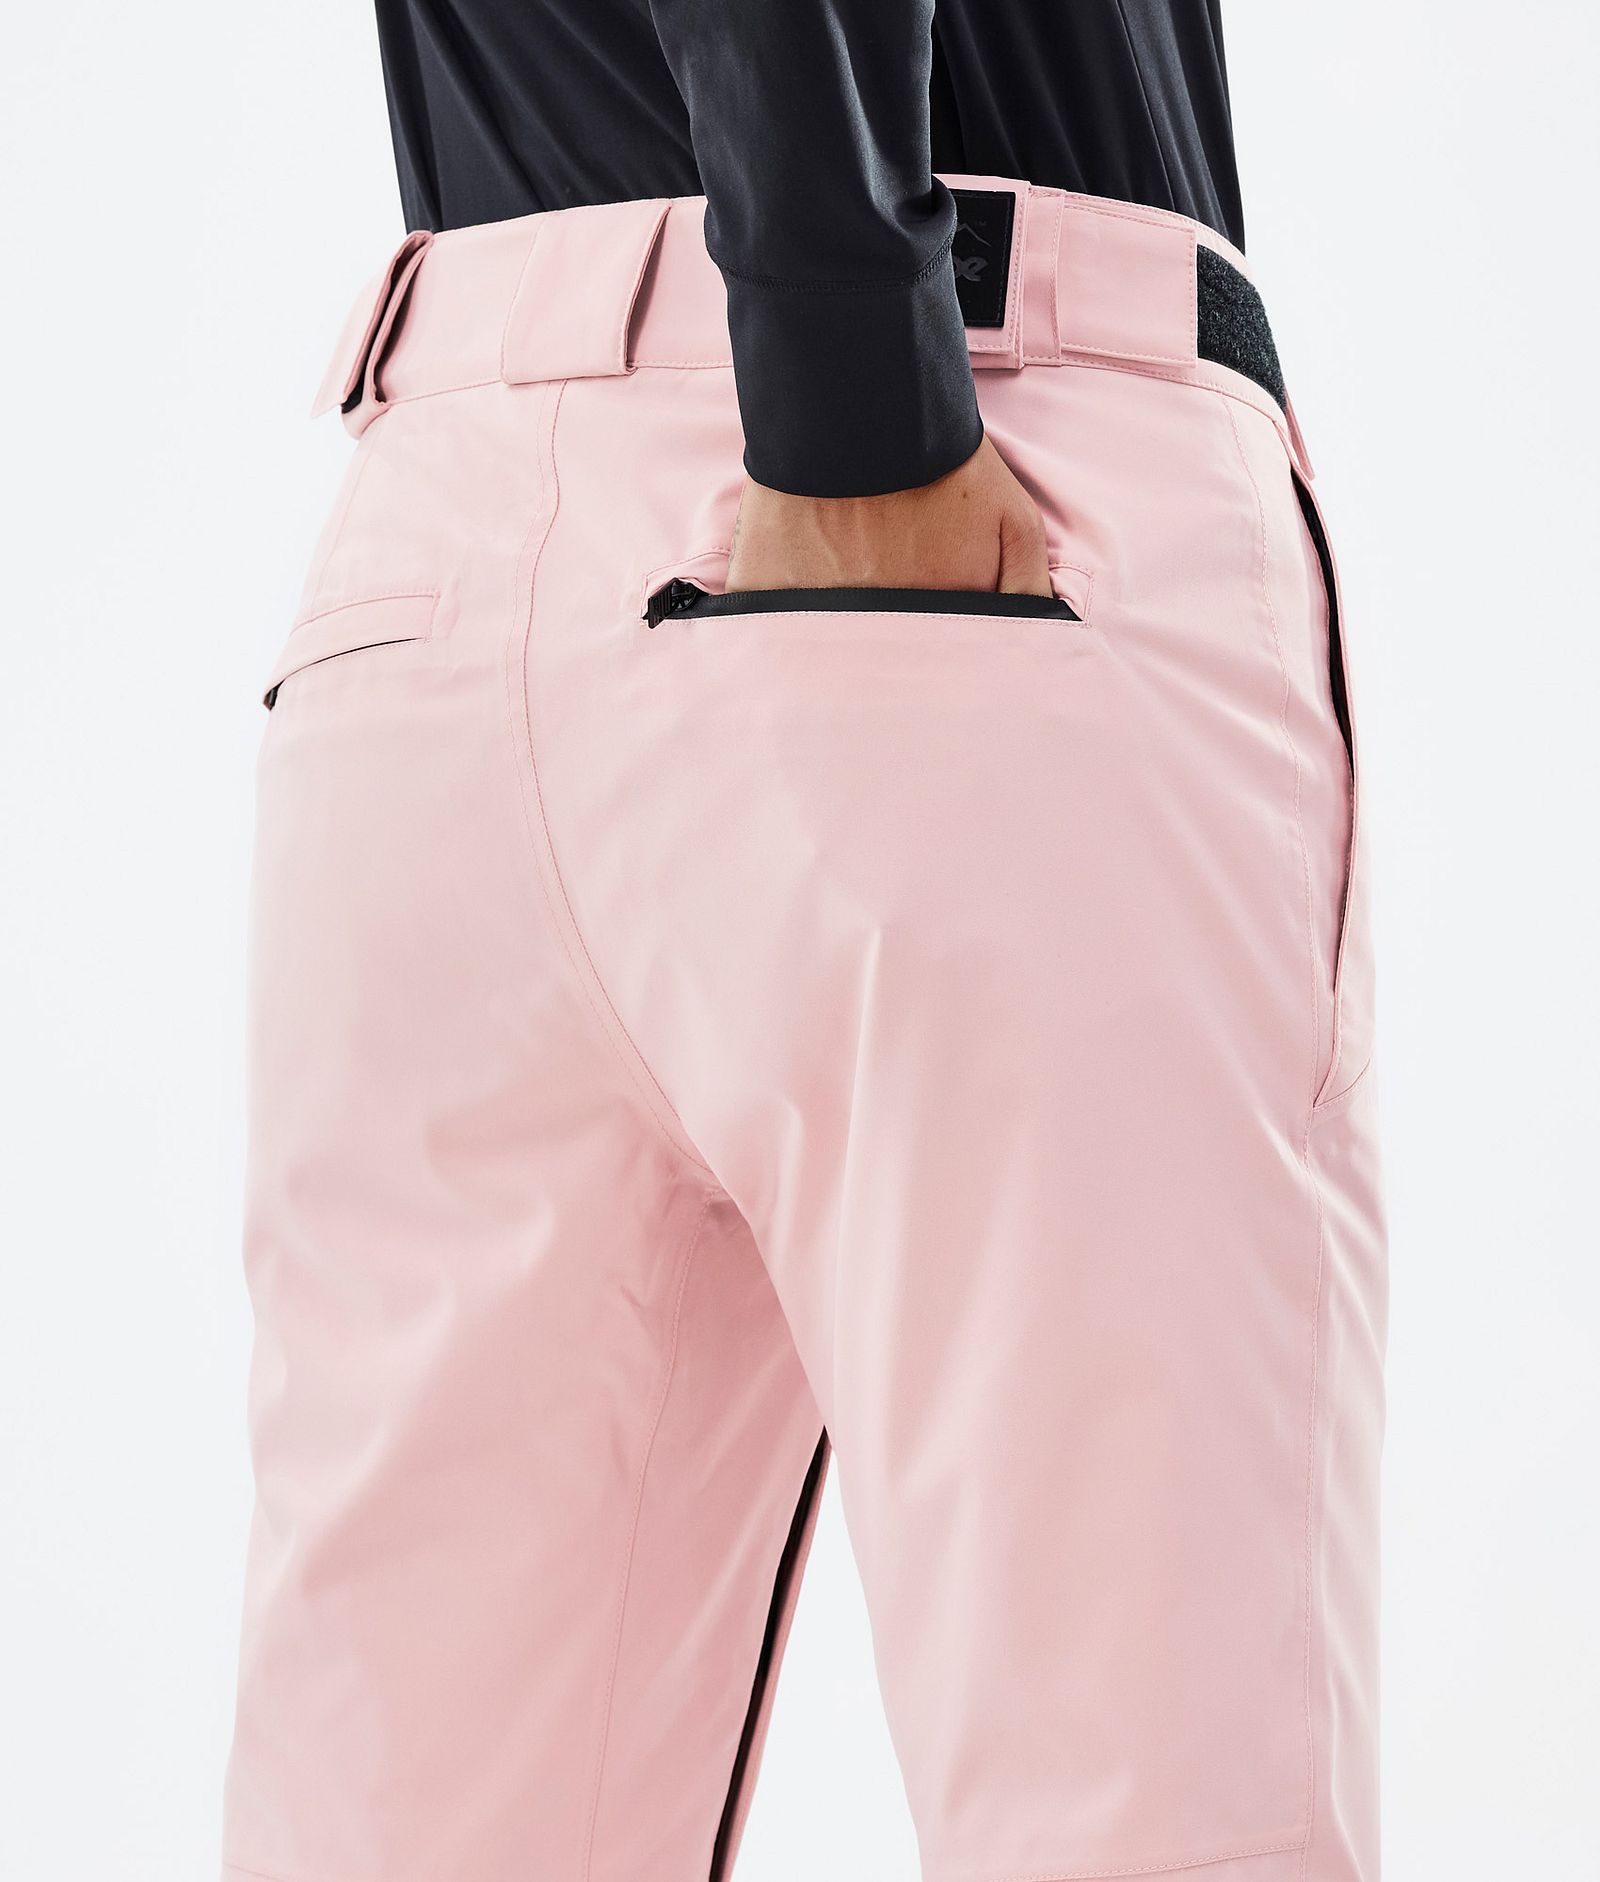 Dope Con W 2022 Skihose Damen Soft Pink